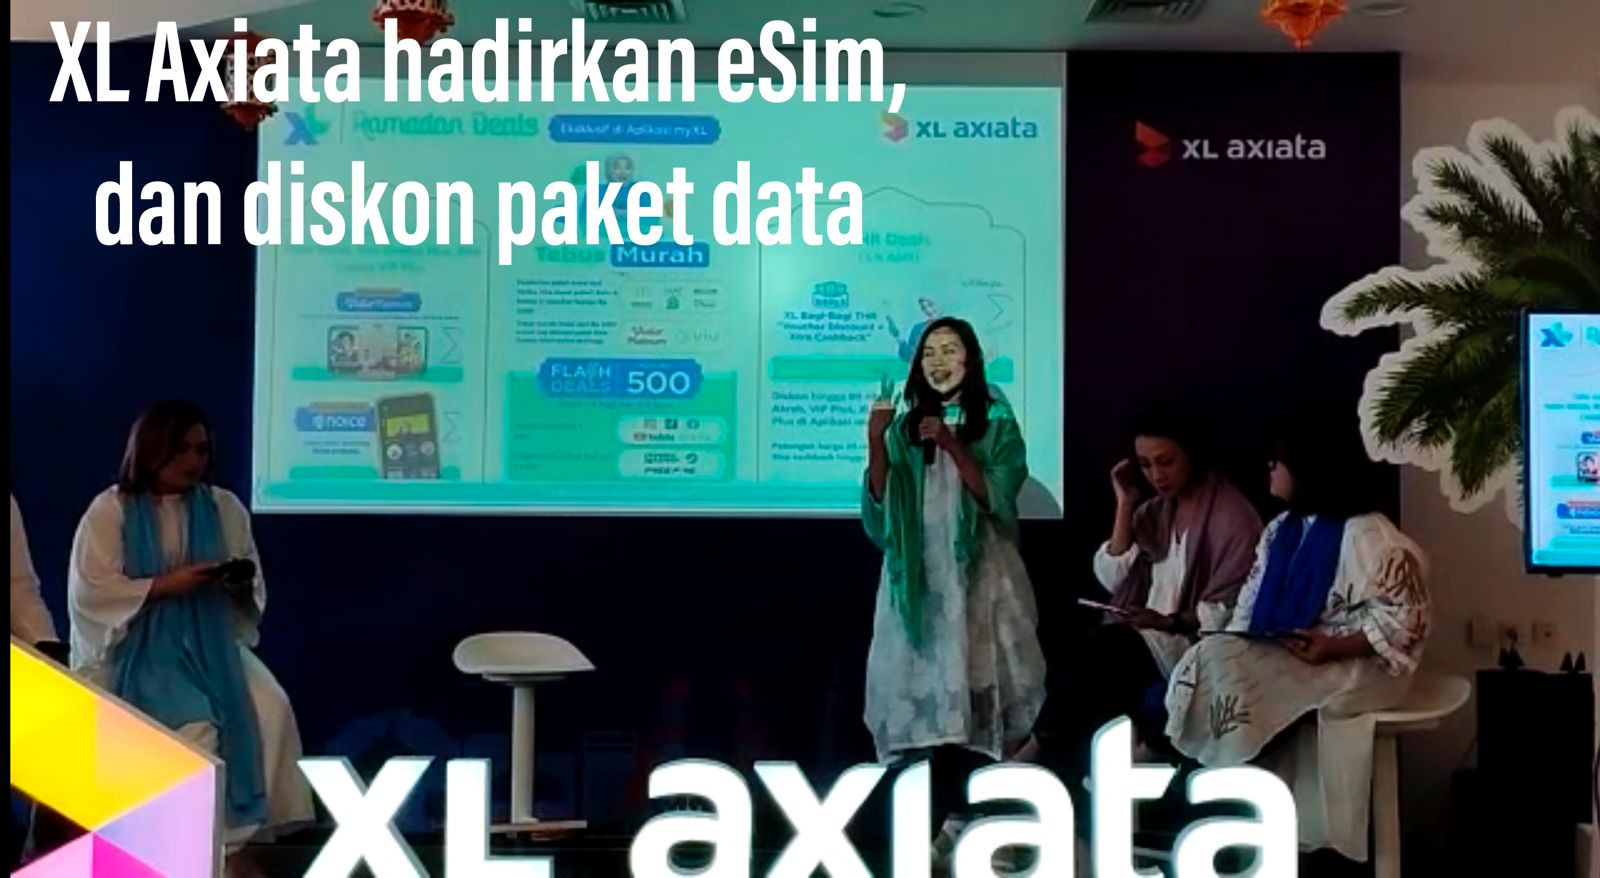 XL Axiata hadirkan eSIM dan diskon paket data